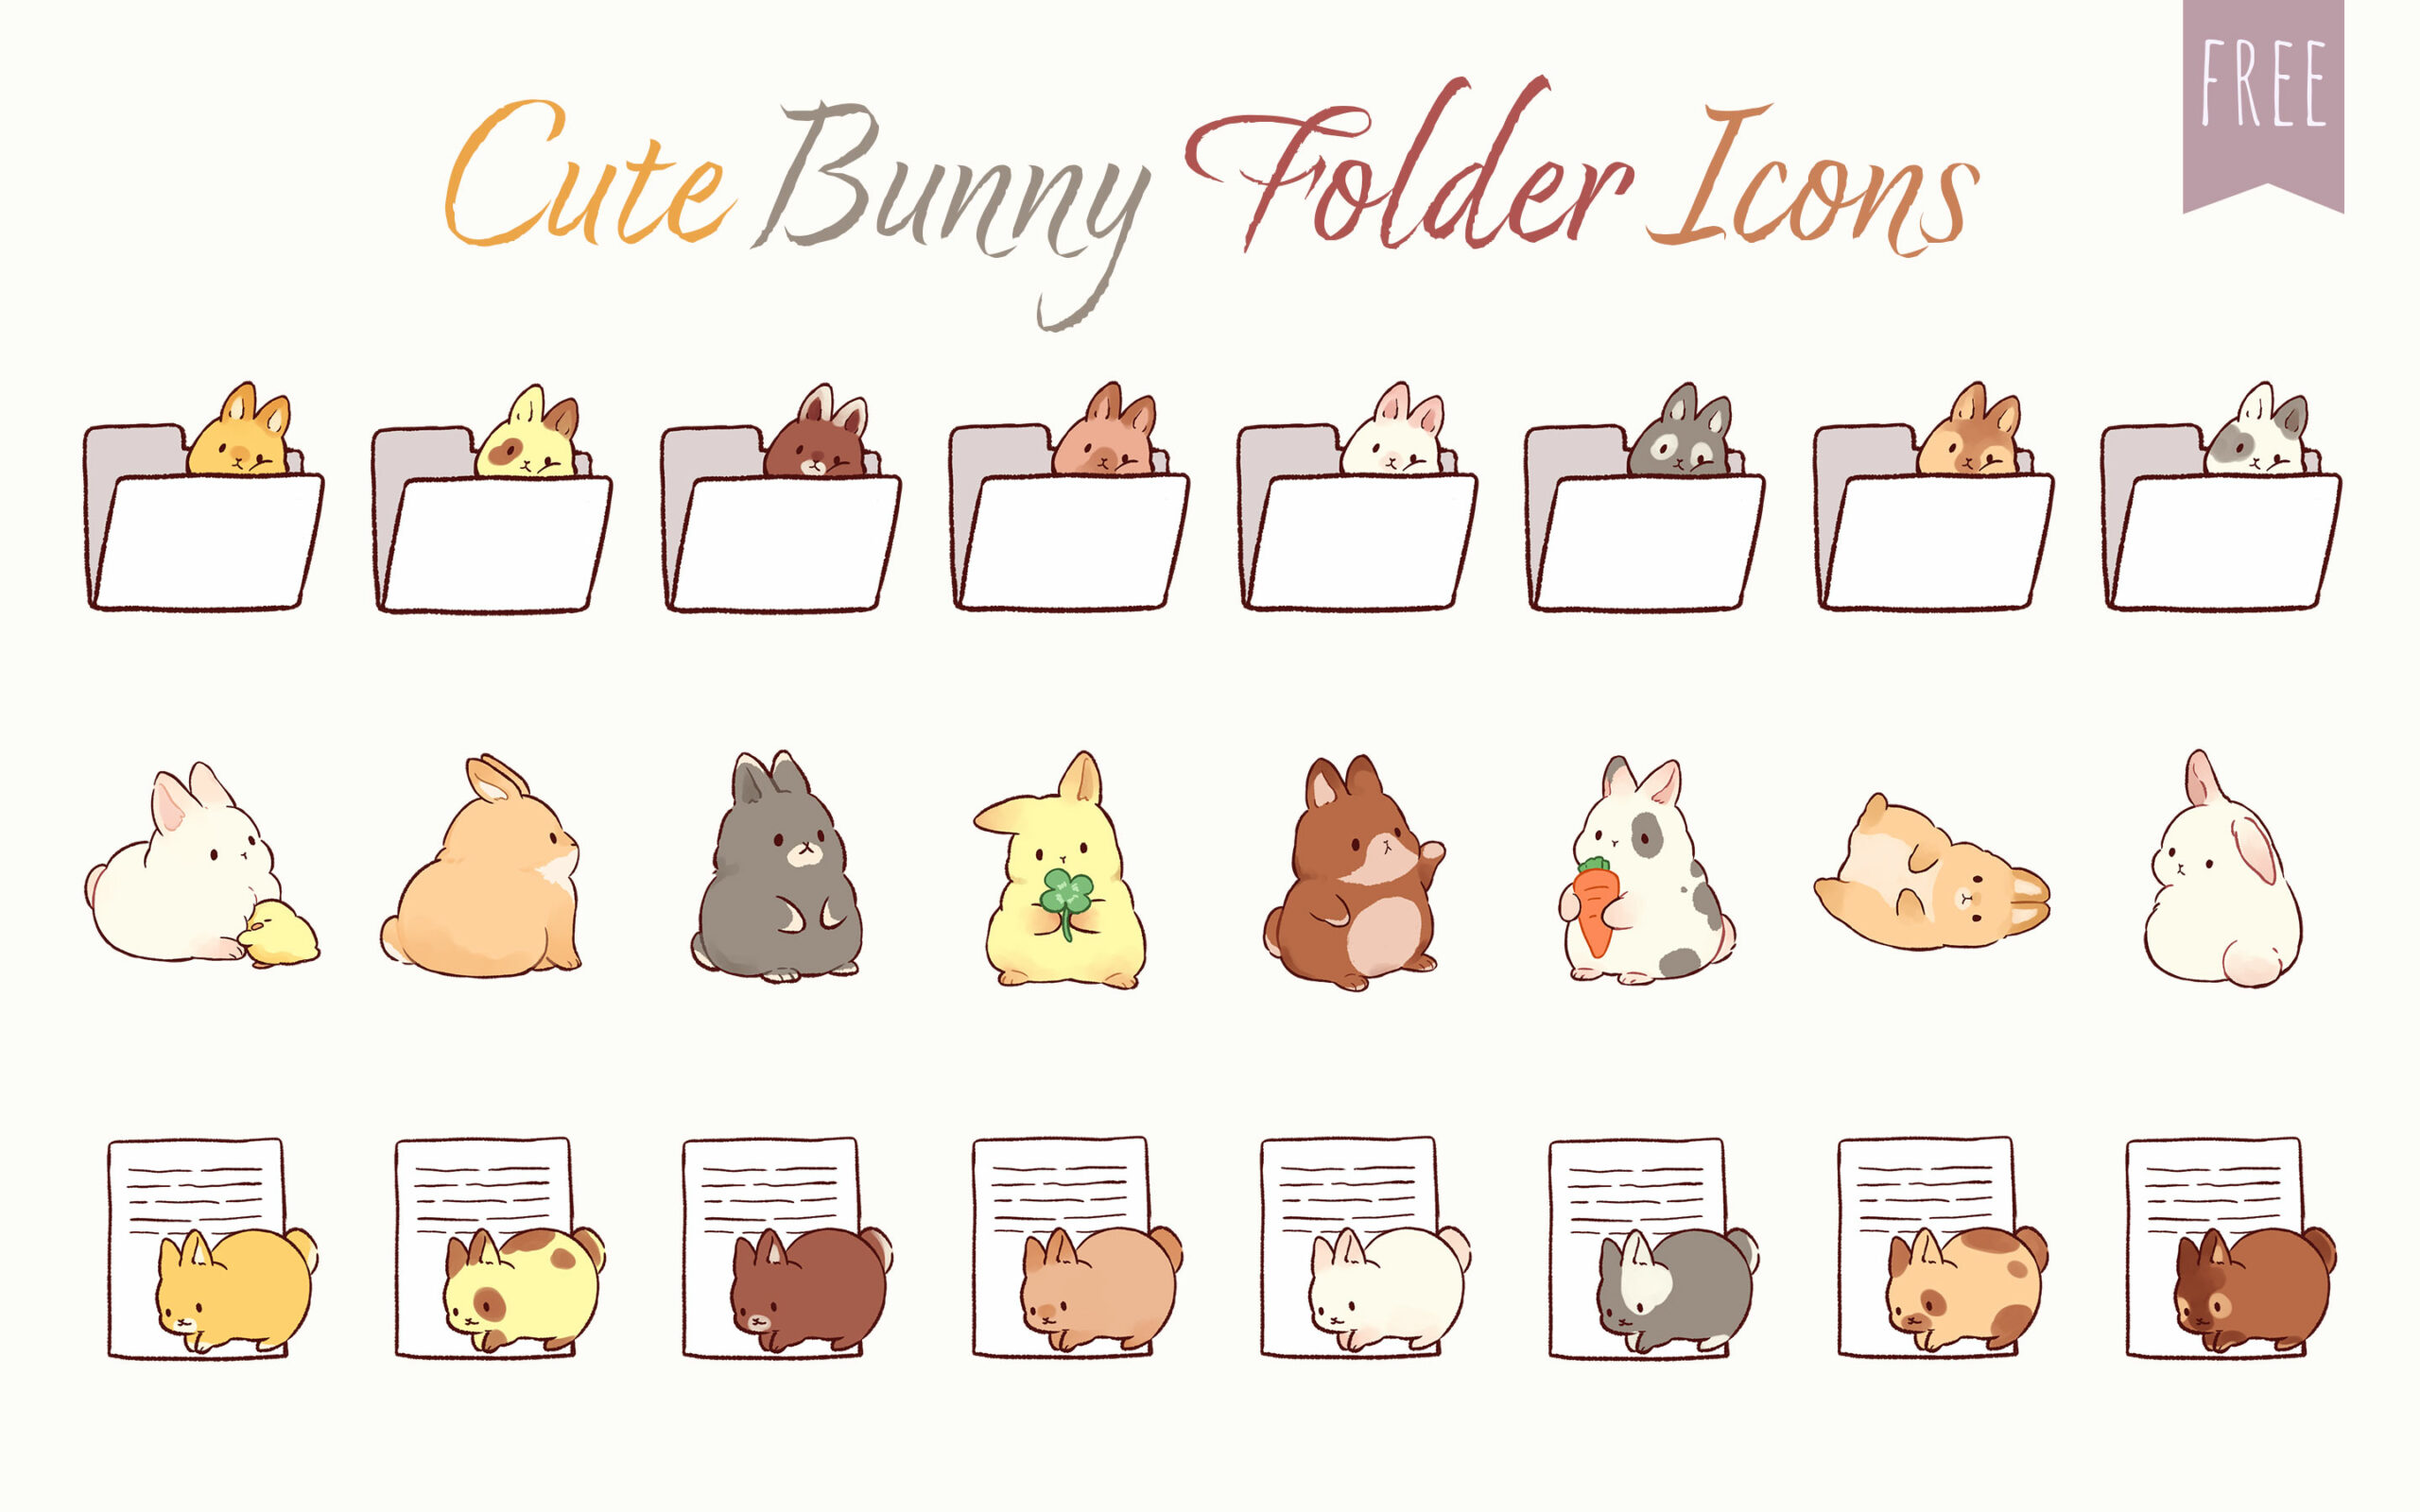 Cute Bunny Folder Icons Aesthetic Free Windows & Mac Folder Ic